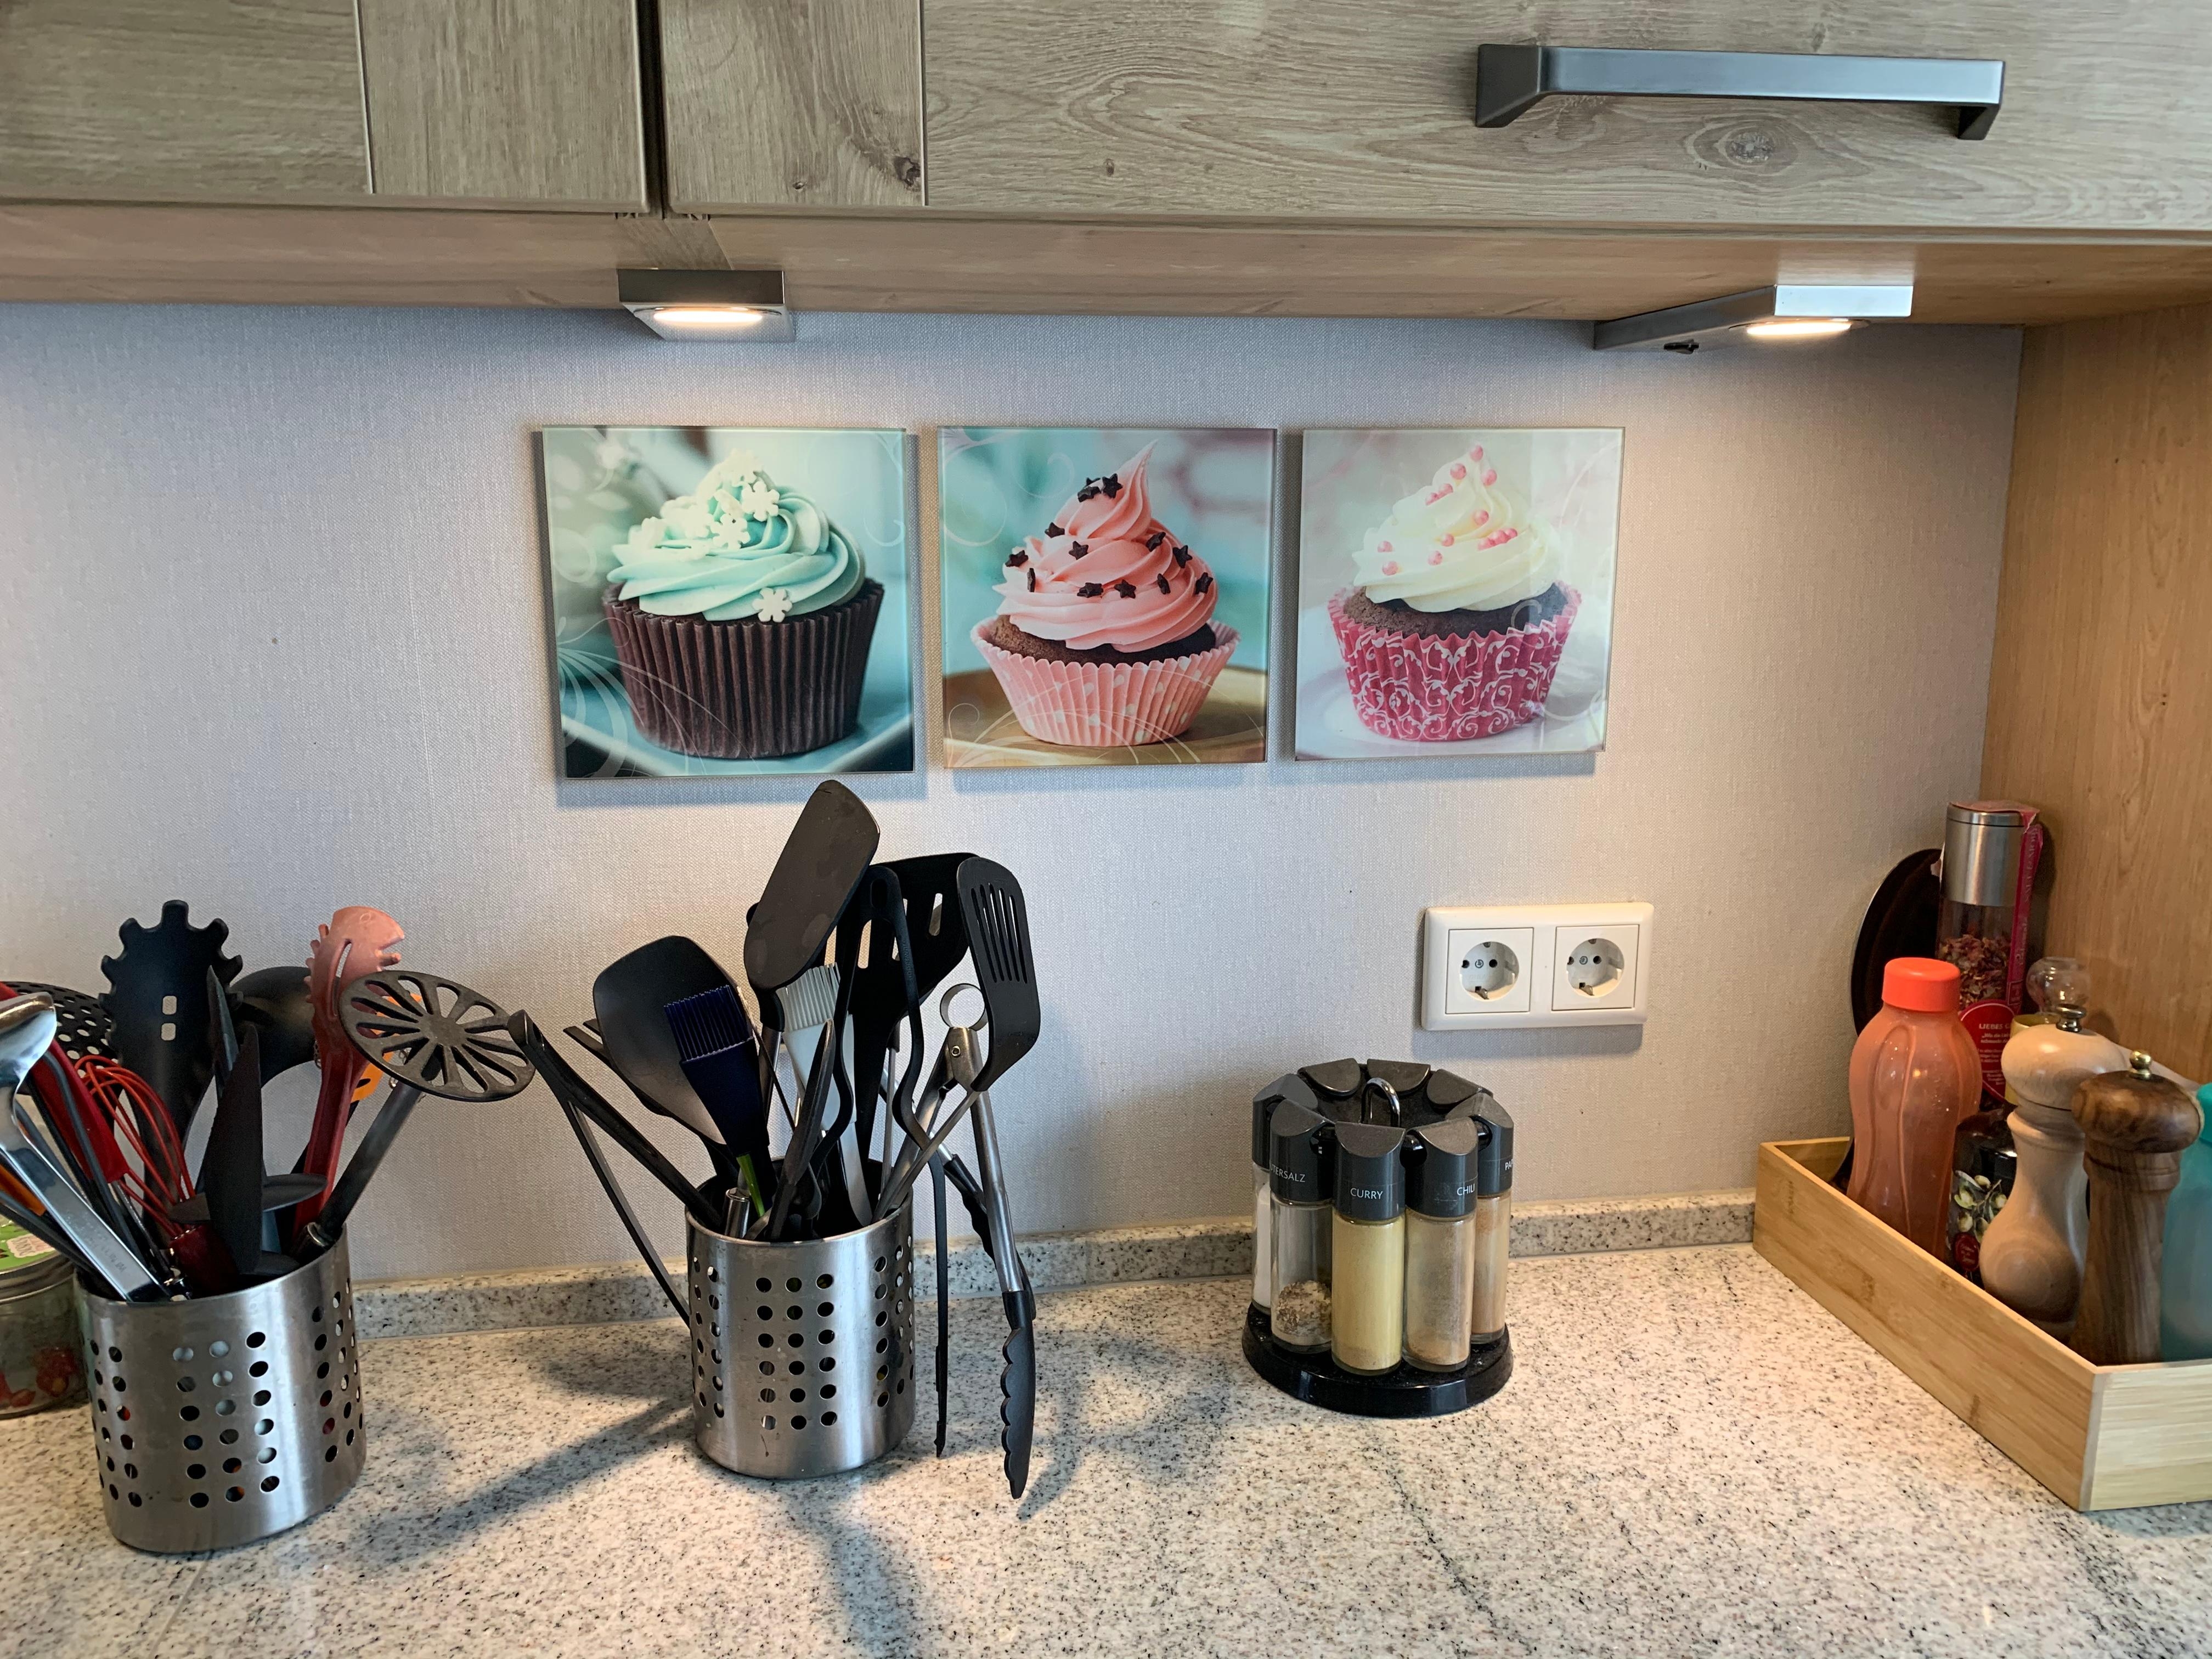 #bilder in der #küche umgehangen #cupcakes